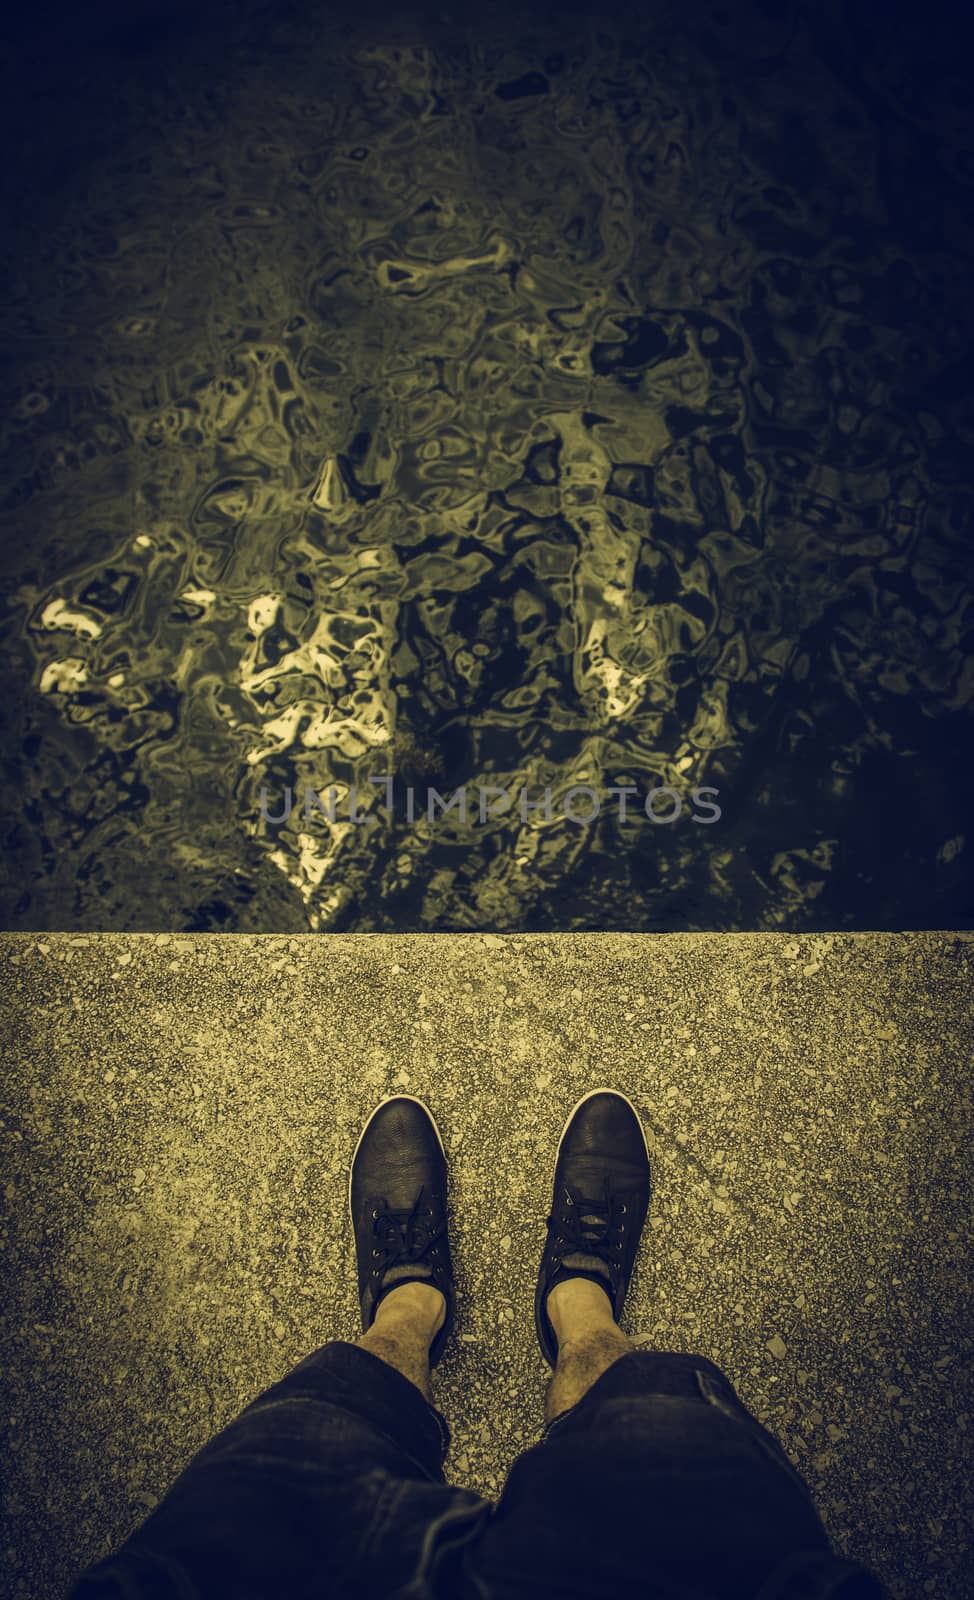 Feet on the water edge by esebene